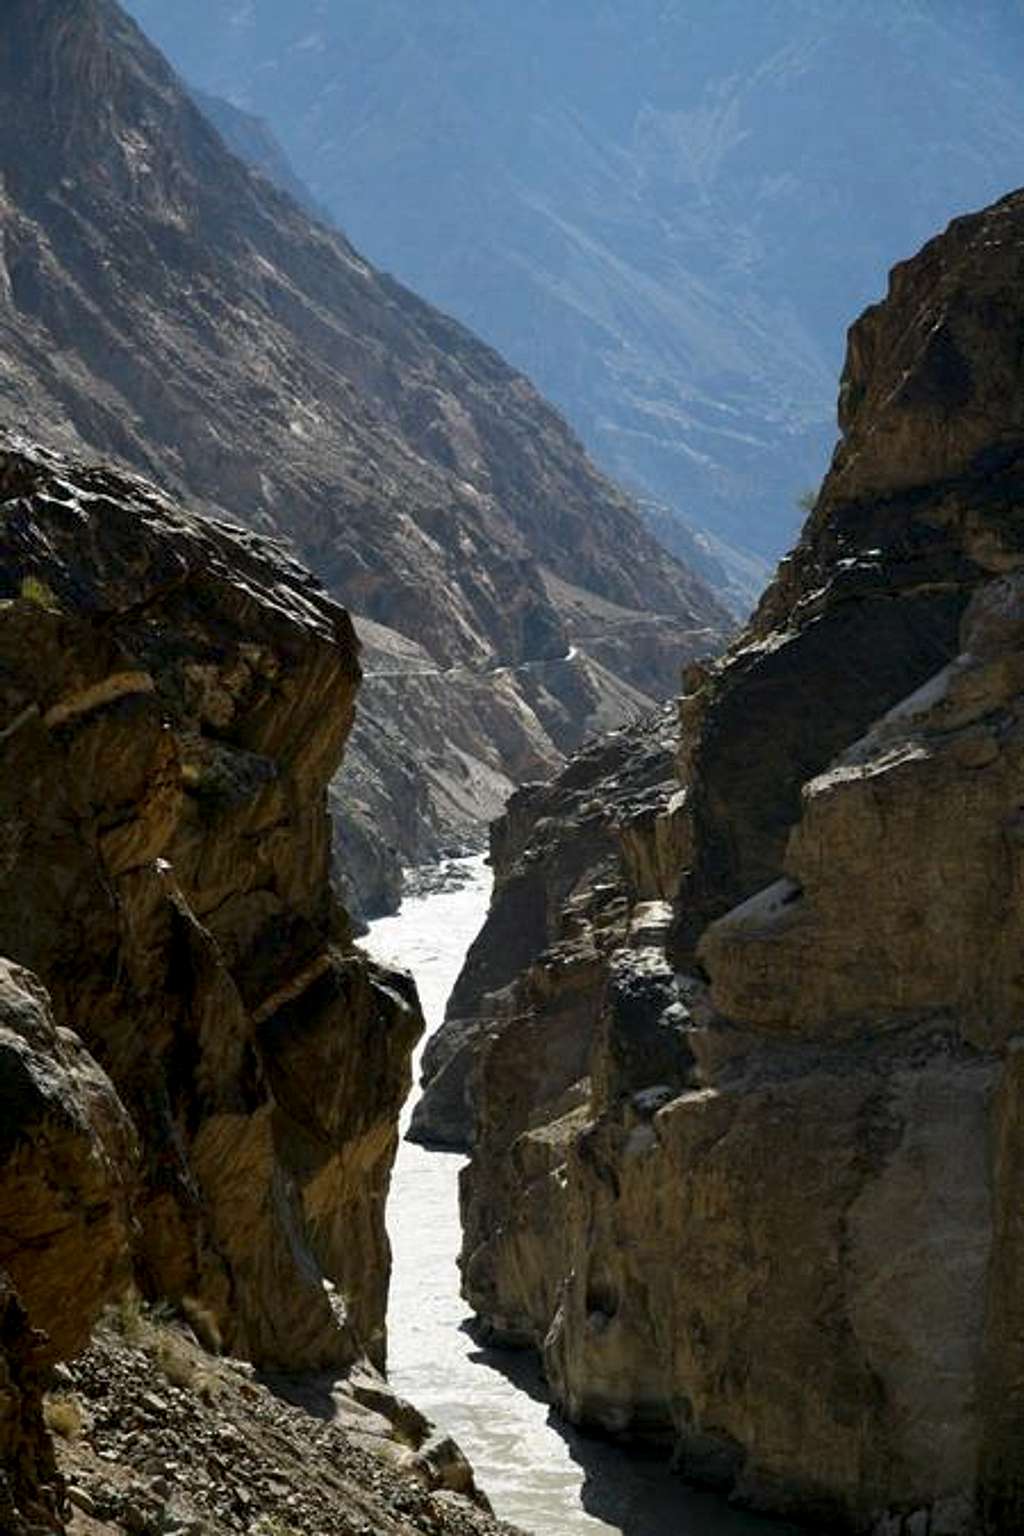 River Indus Gorge, Karakoram, Pakistan